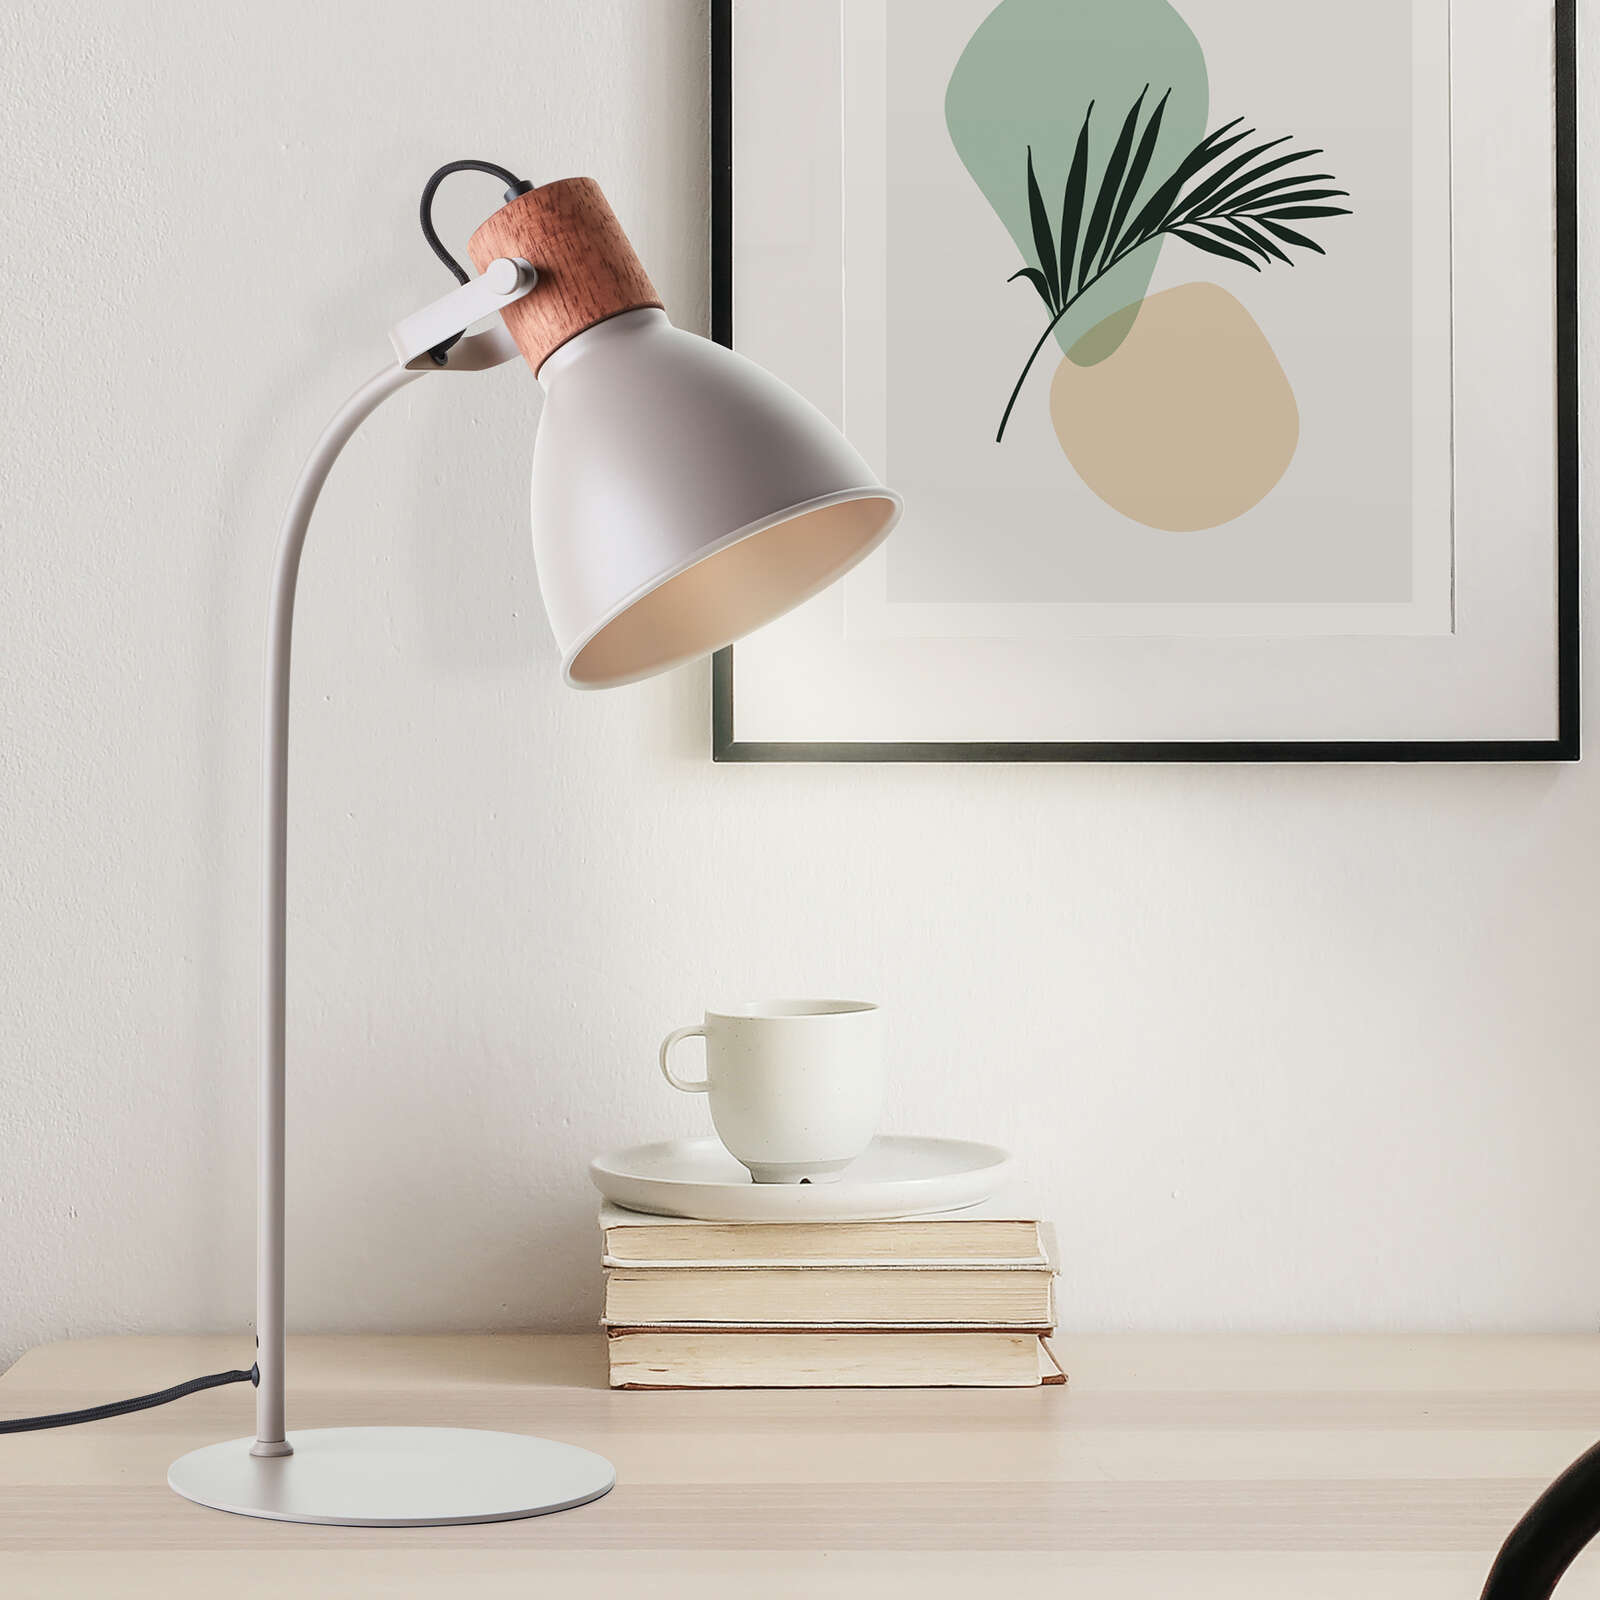             Wooden table lamp - Franziska 3 - Grey
        